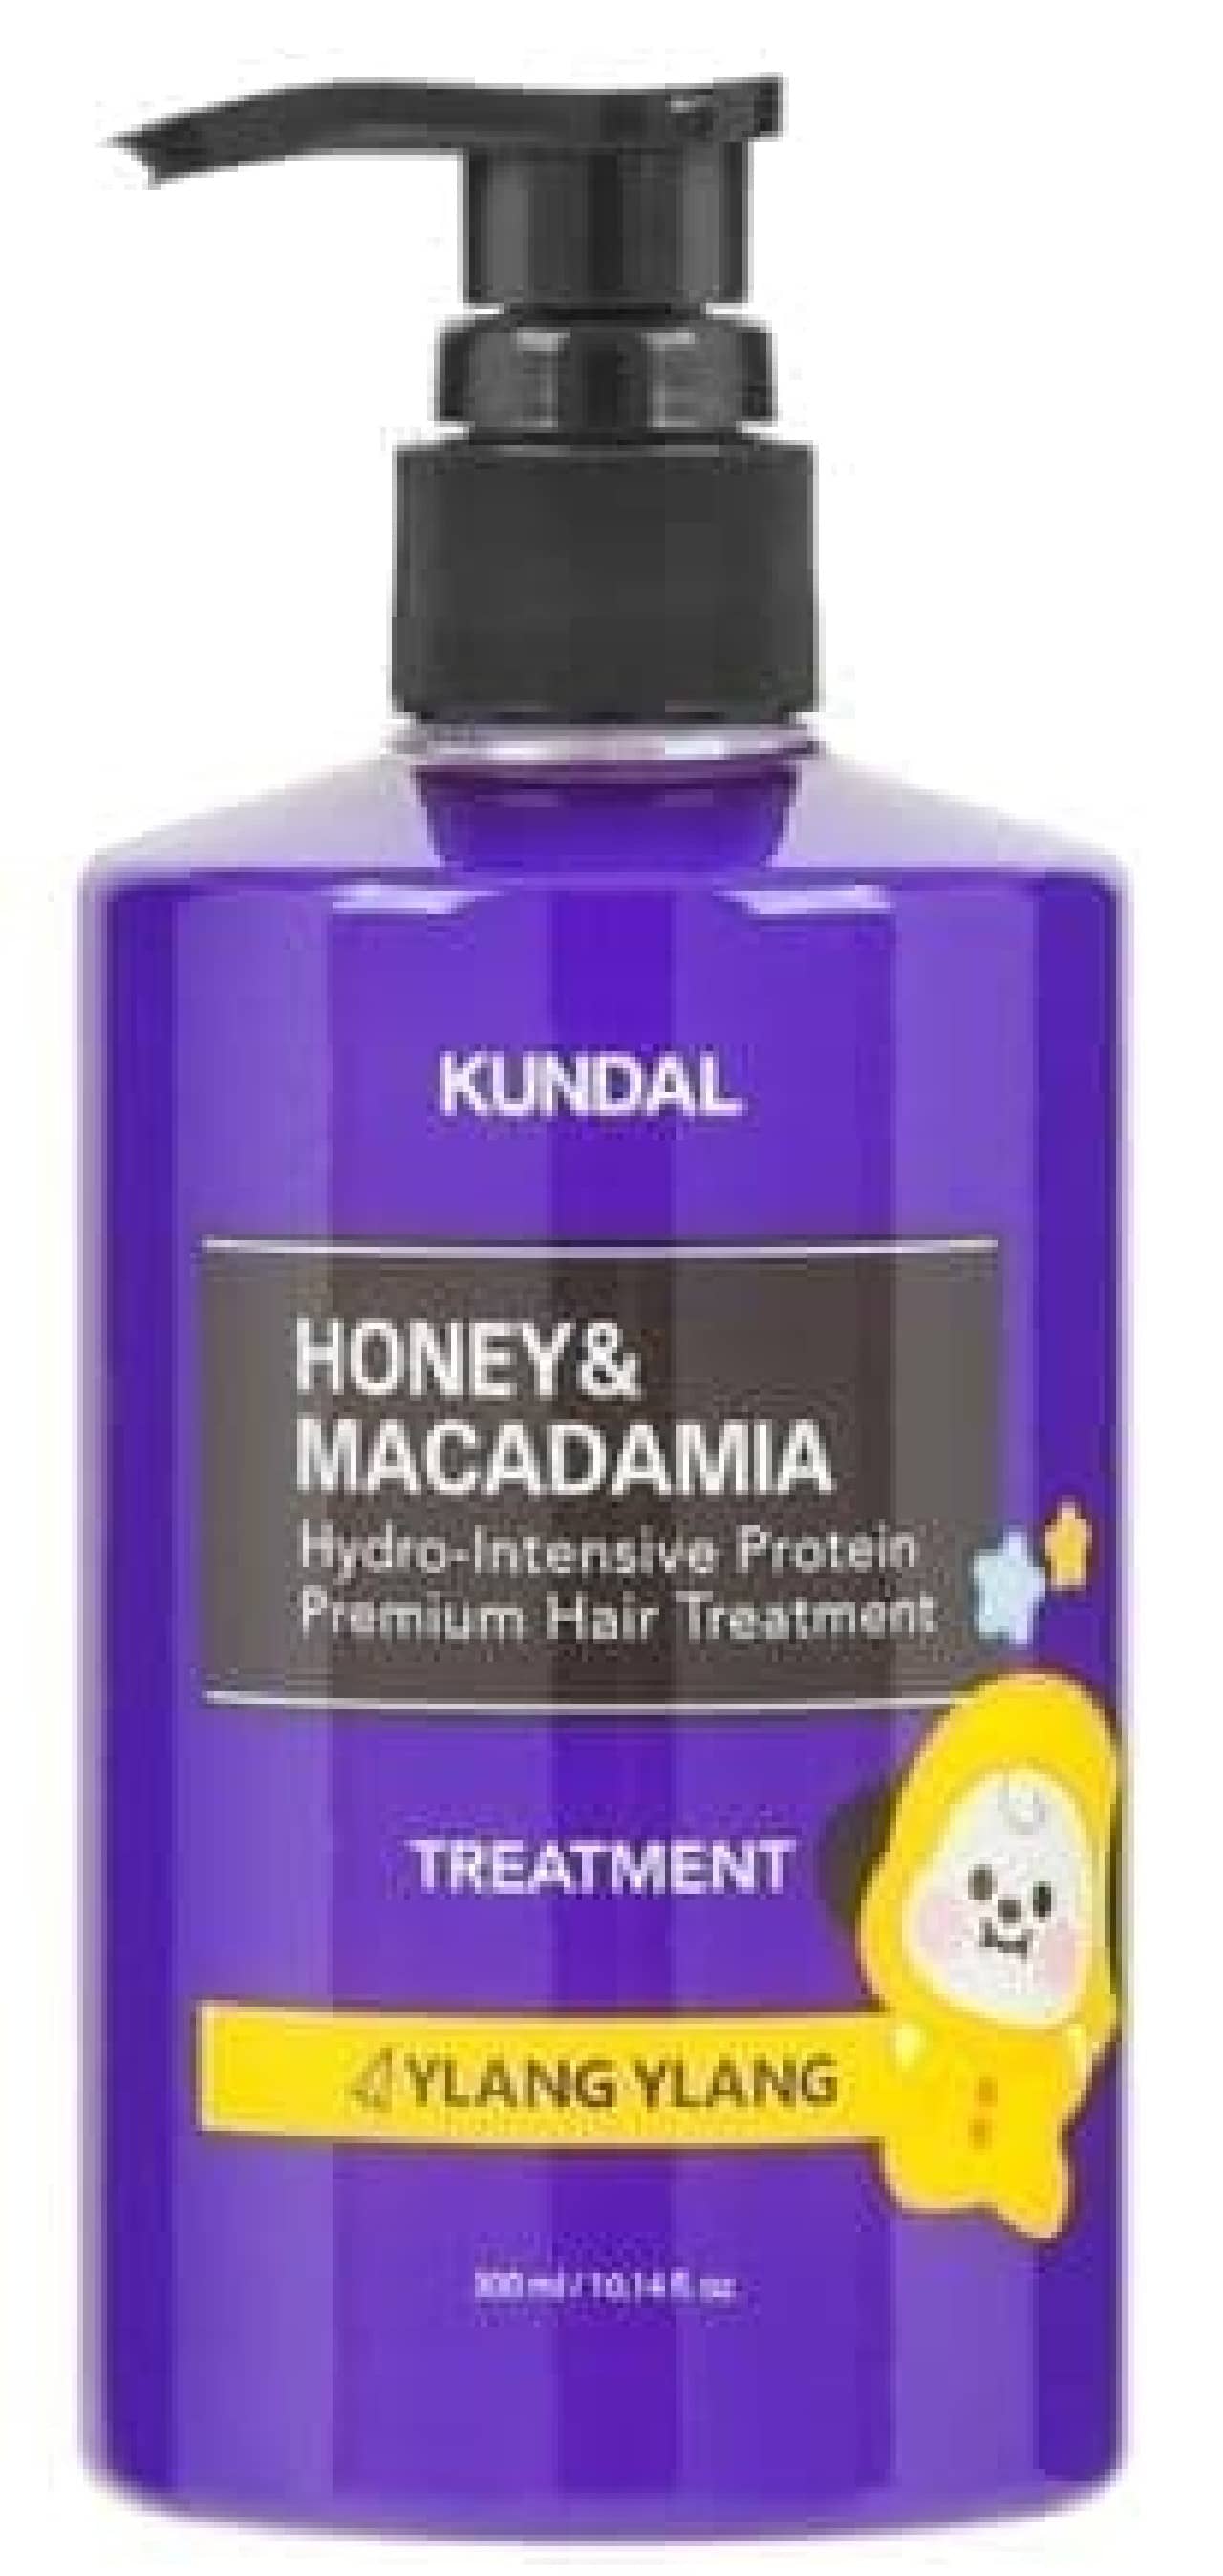 Kundal x BT21 "Honey & Macadamia Premium Hair Treatment"